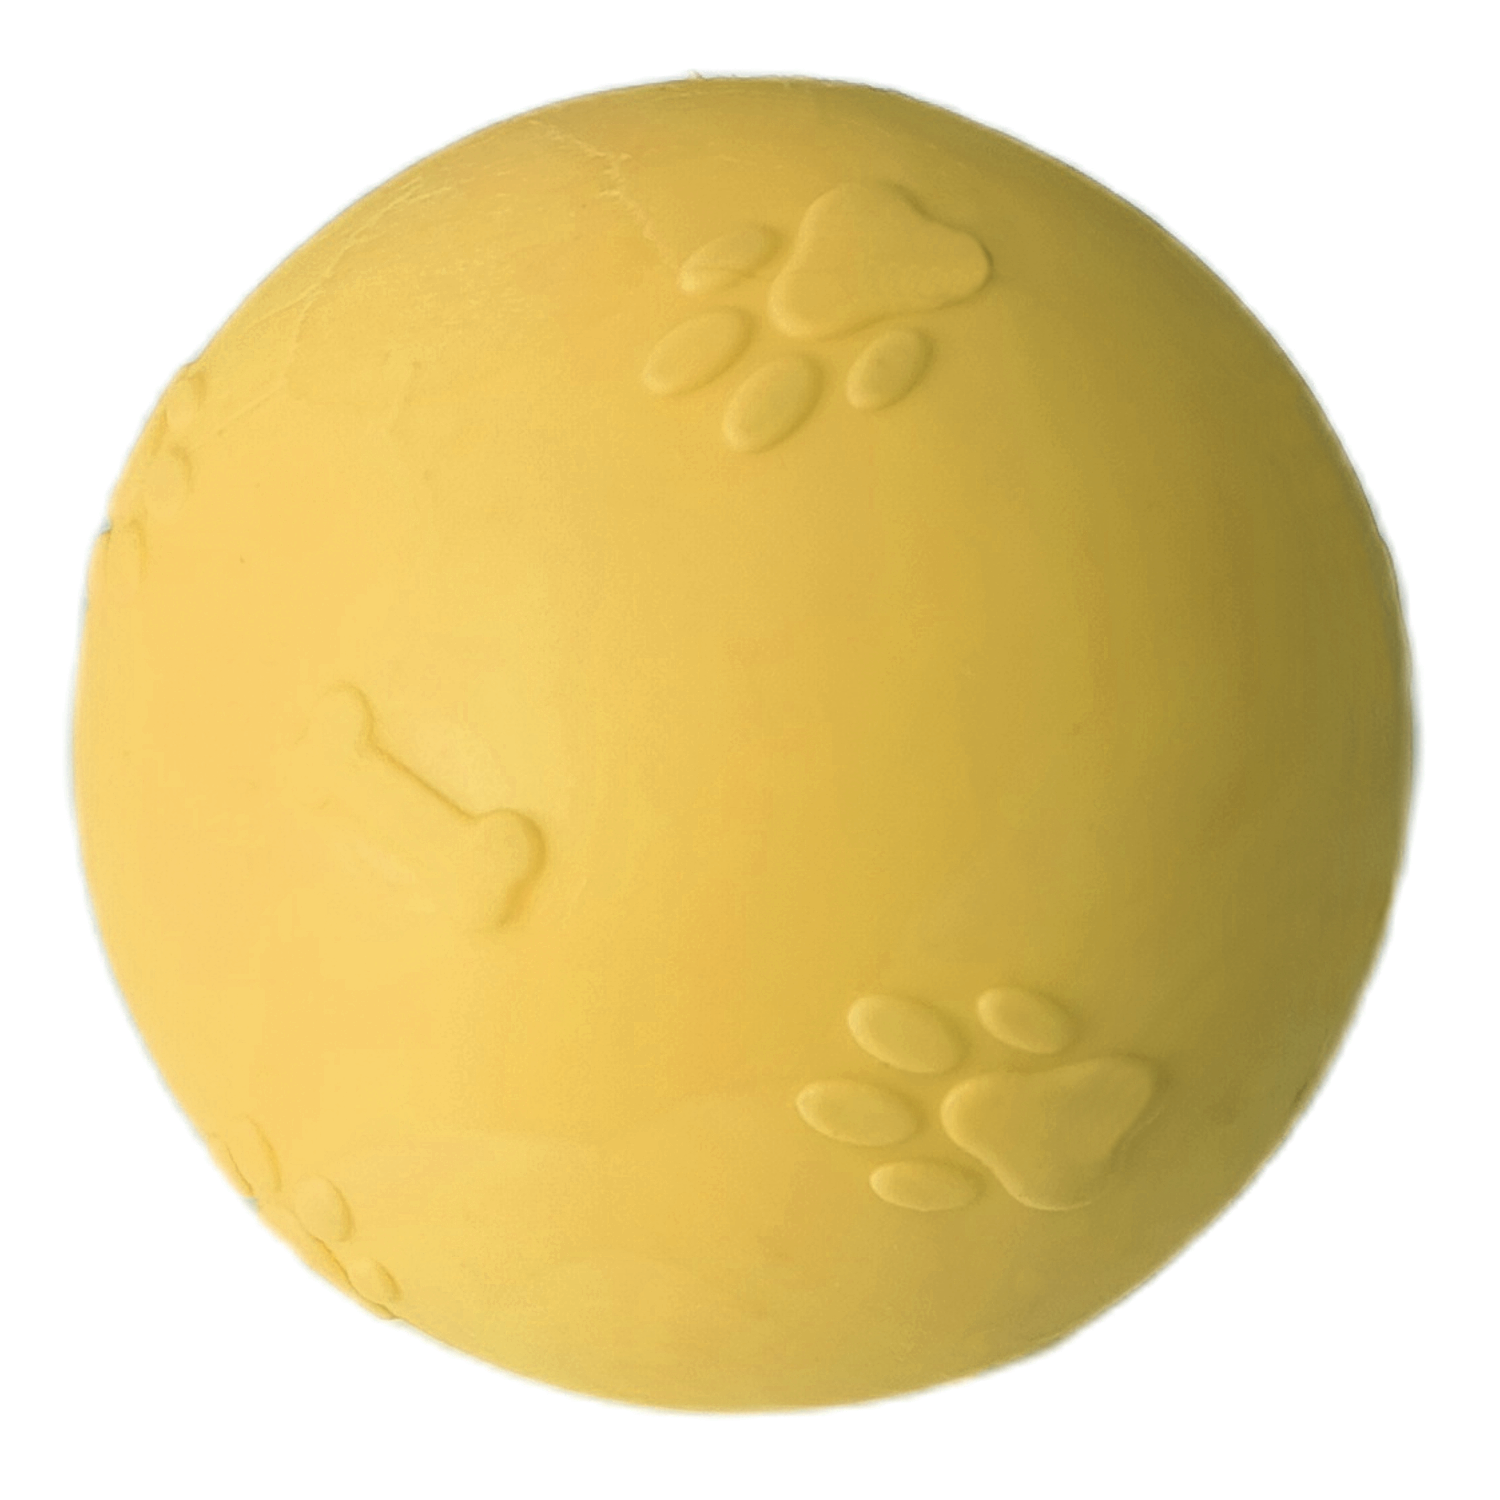 CLZ205 Pati Desenli Sert Köpek Oyun Topu 6 cm Small Sarı